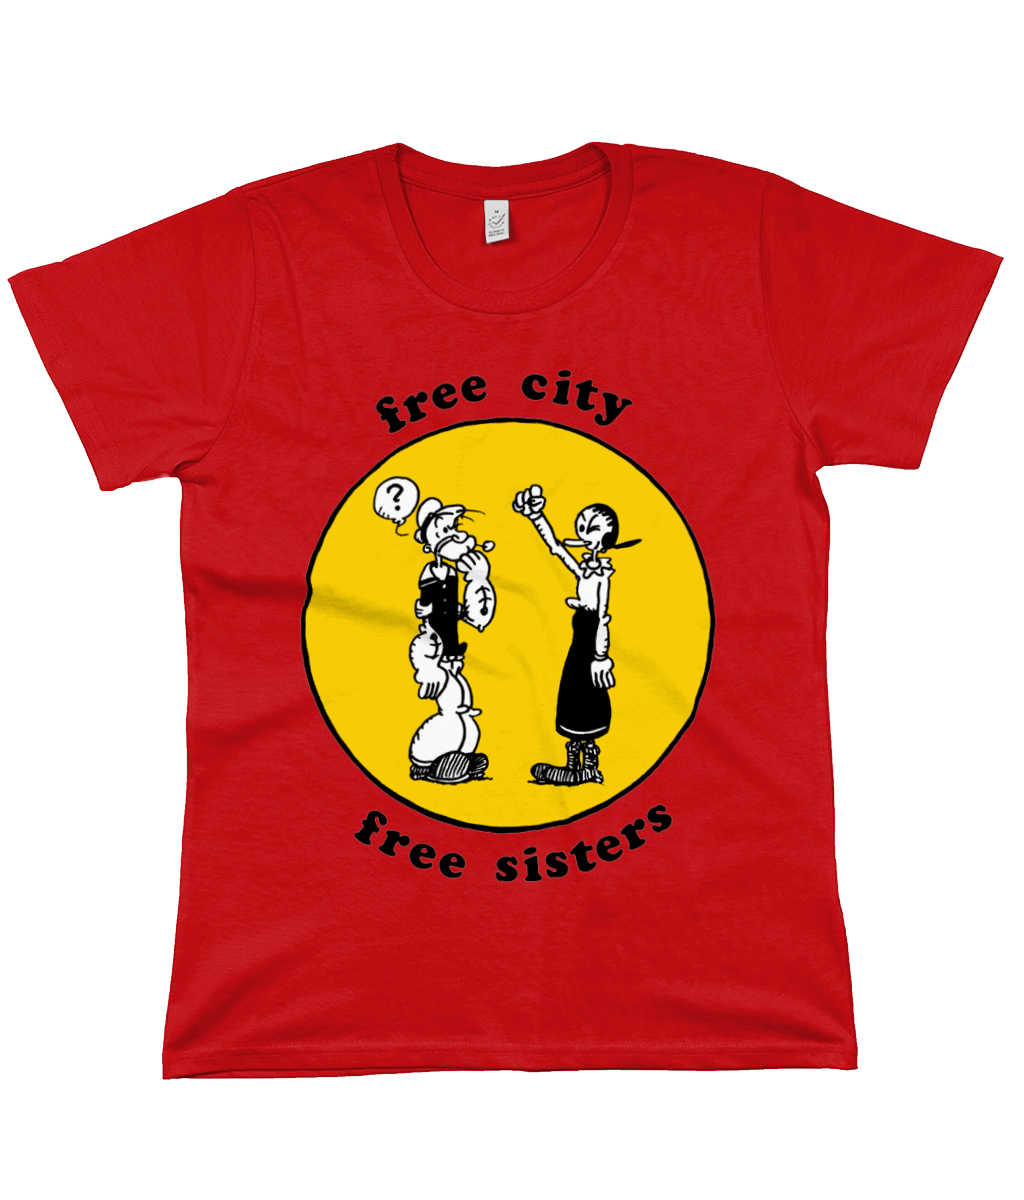 free city free sisters - Women's T Shirt